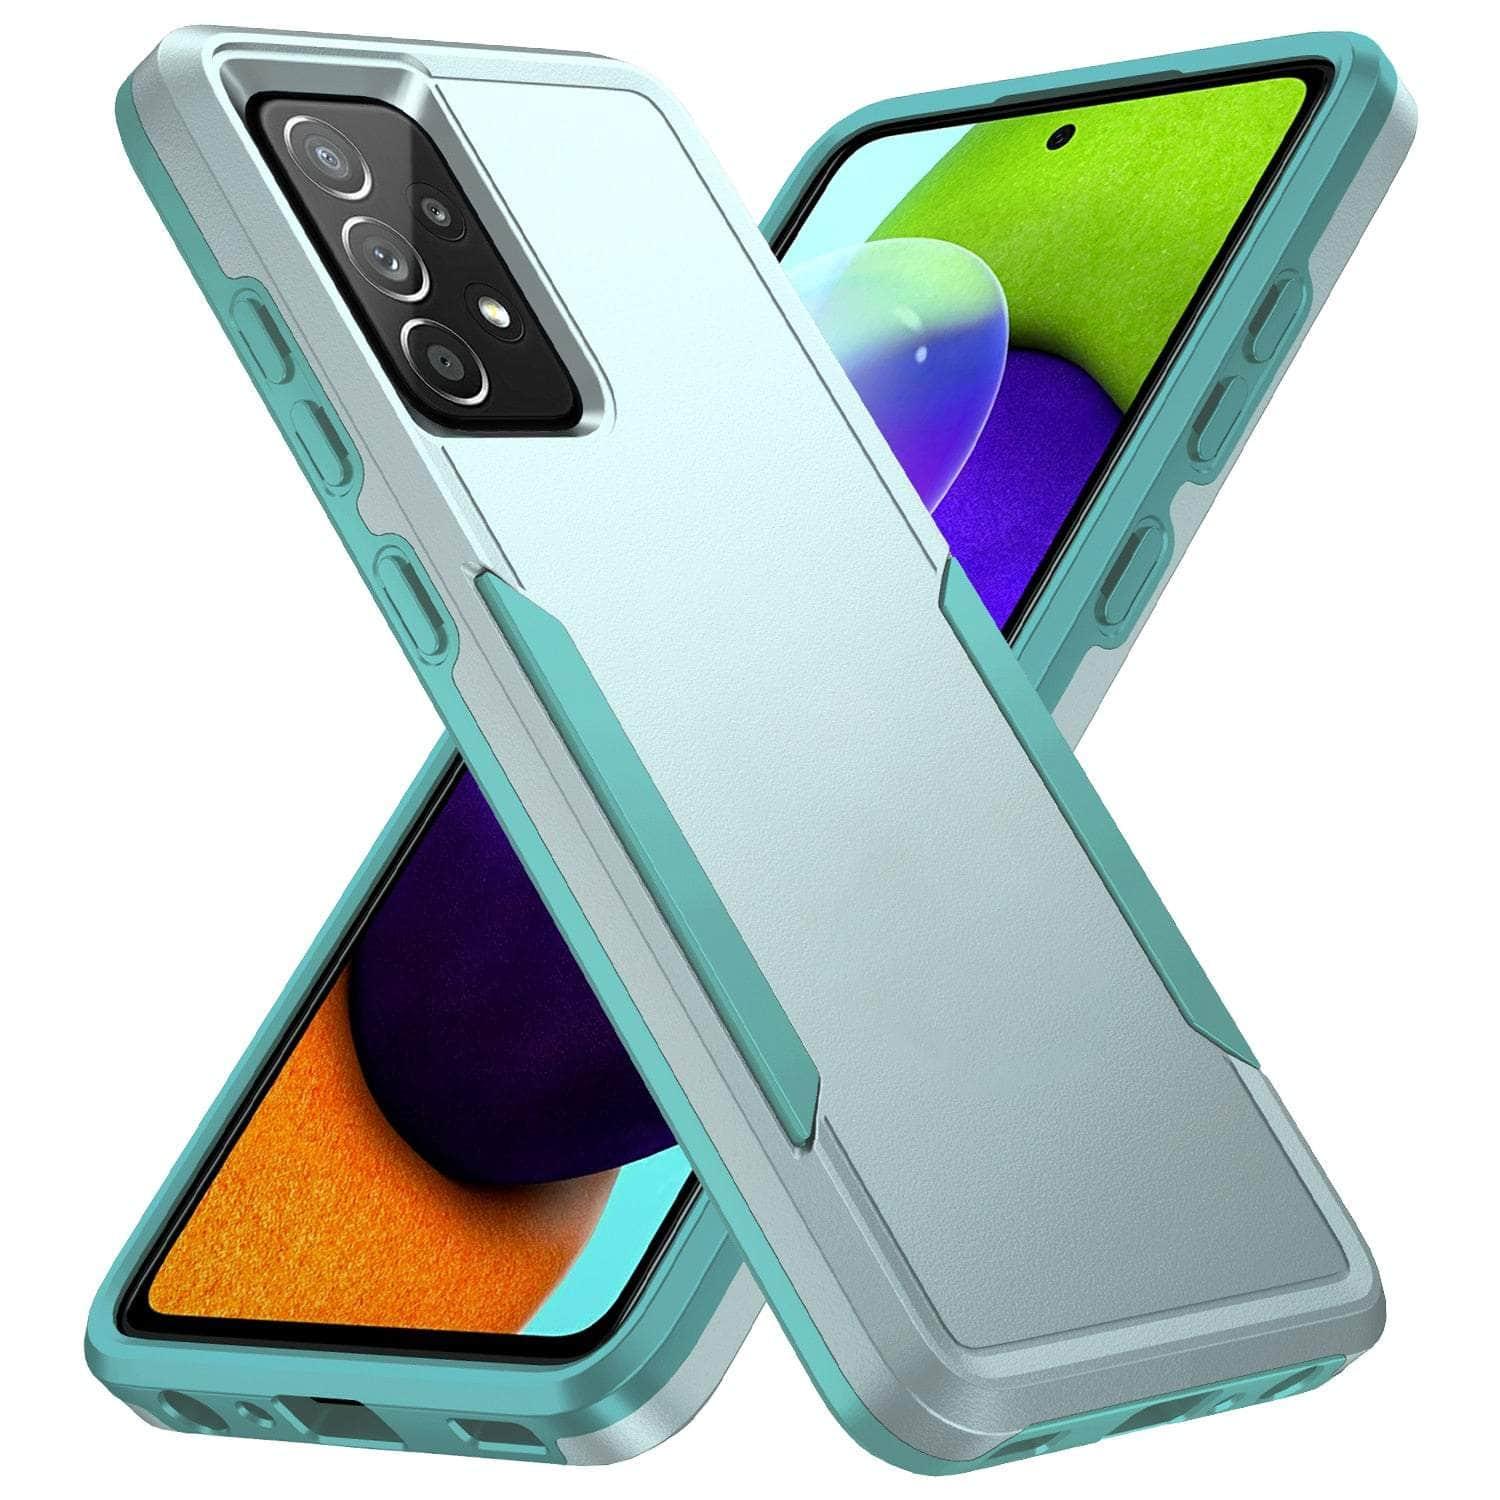 Casebuddy green / for Samsung A53 5G Shockproof Precise Cutout Galaxy A53 Case